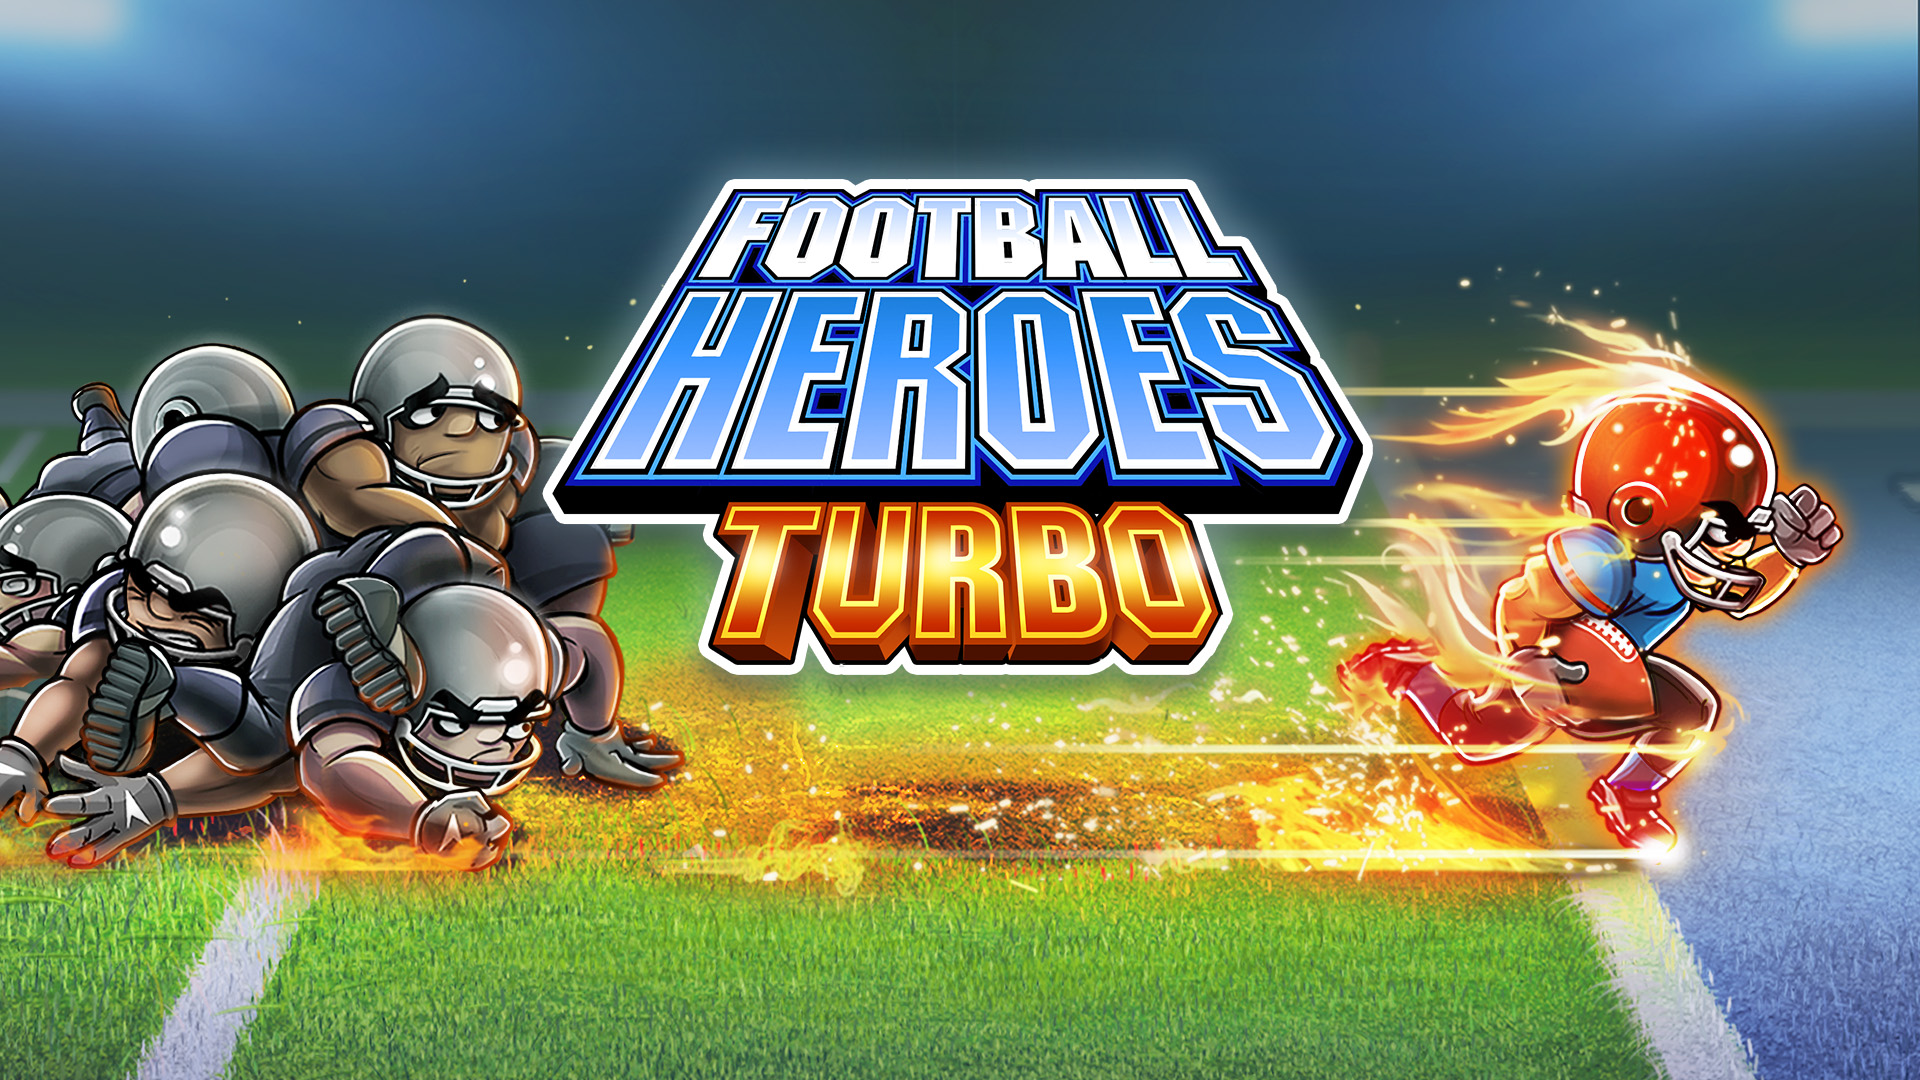 Американский футбол игра компьютерная. Football Heroes Turbo. Американский футбол игра на ПК. Nintendo Football. Nintendo Football game.